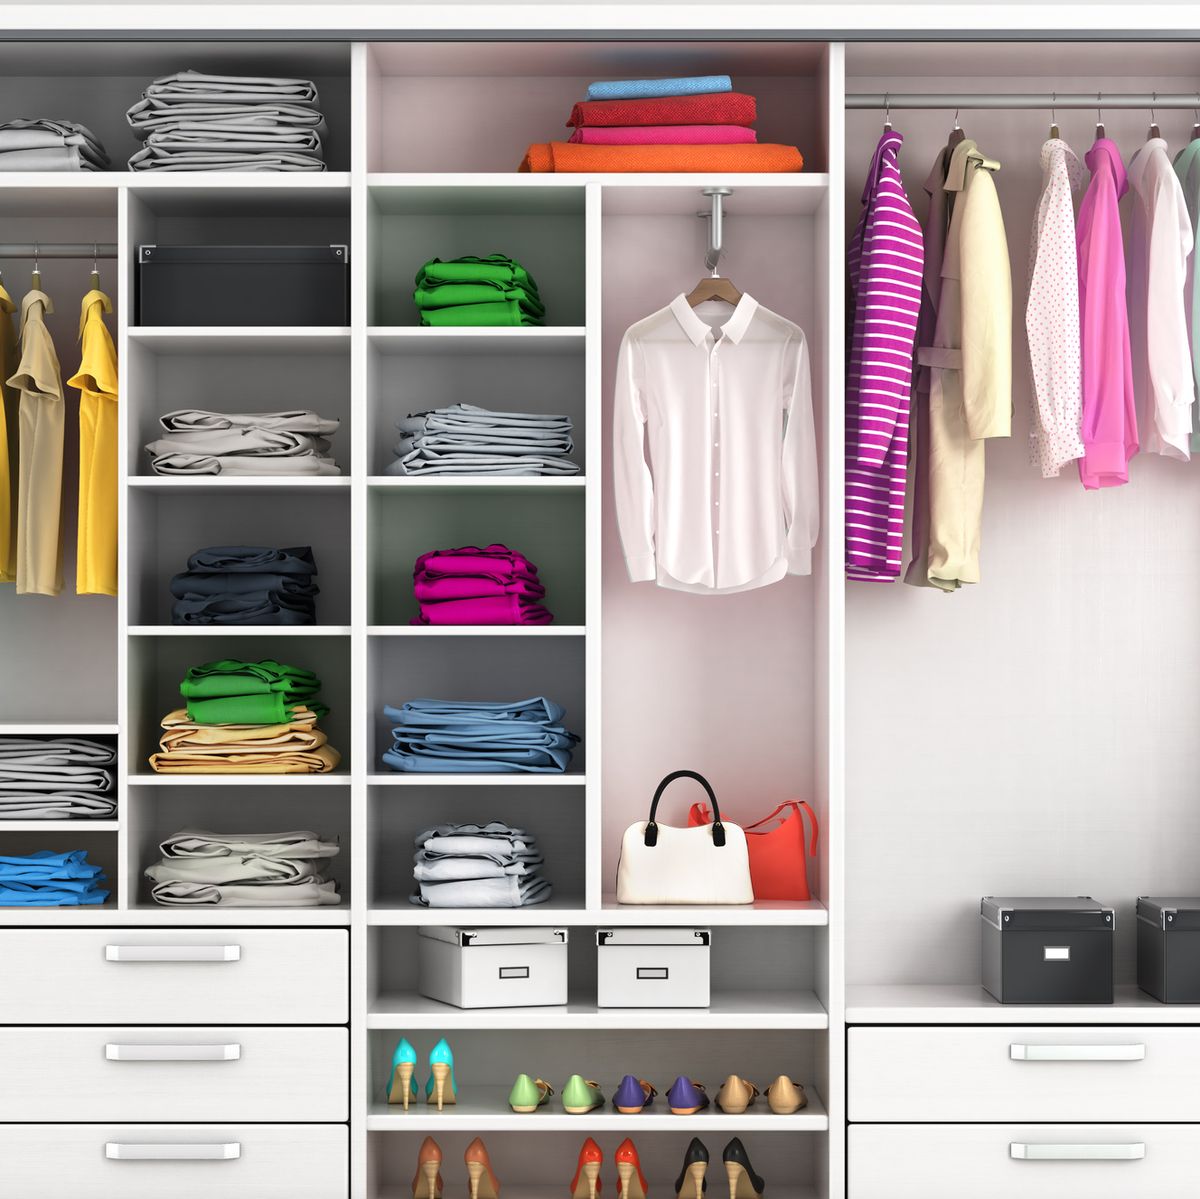 35 Best Closet Organizing Ideas - How to Organize a Small Closet